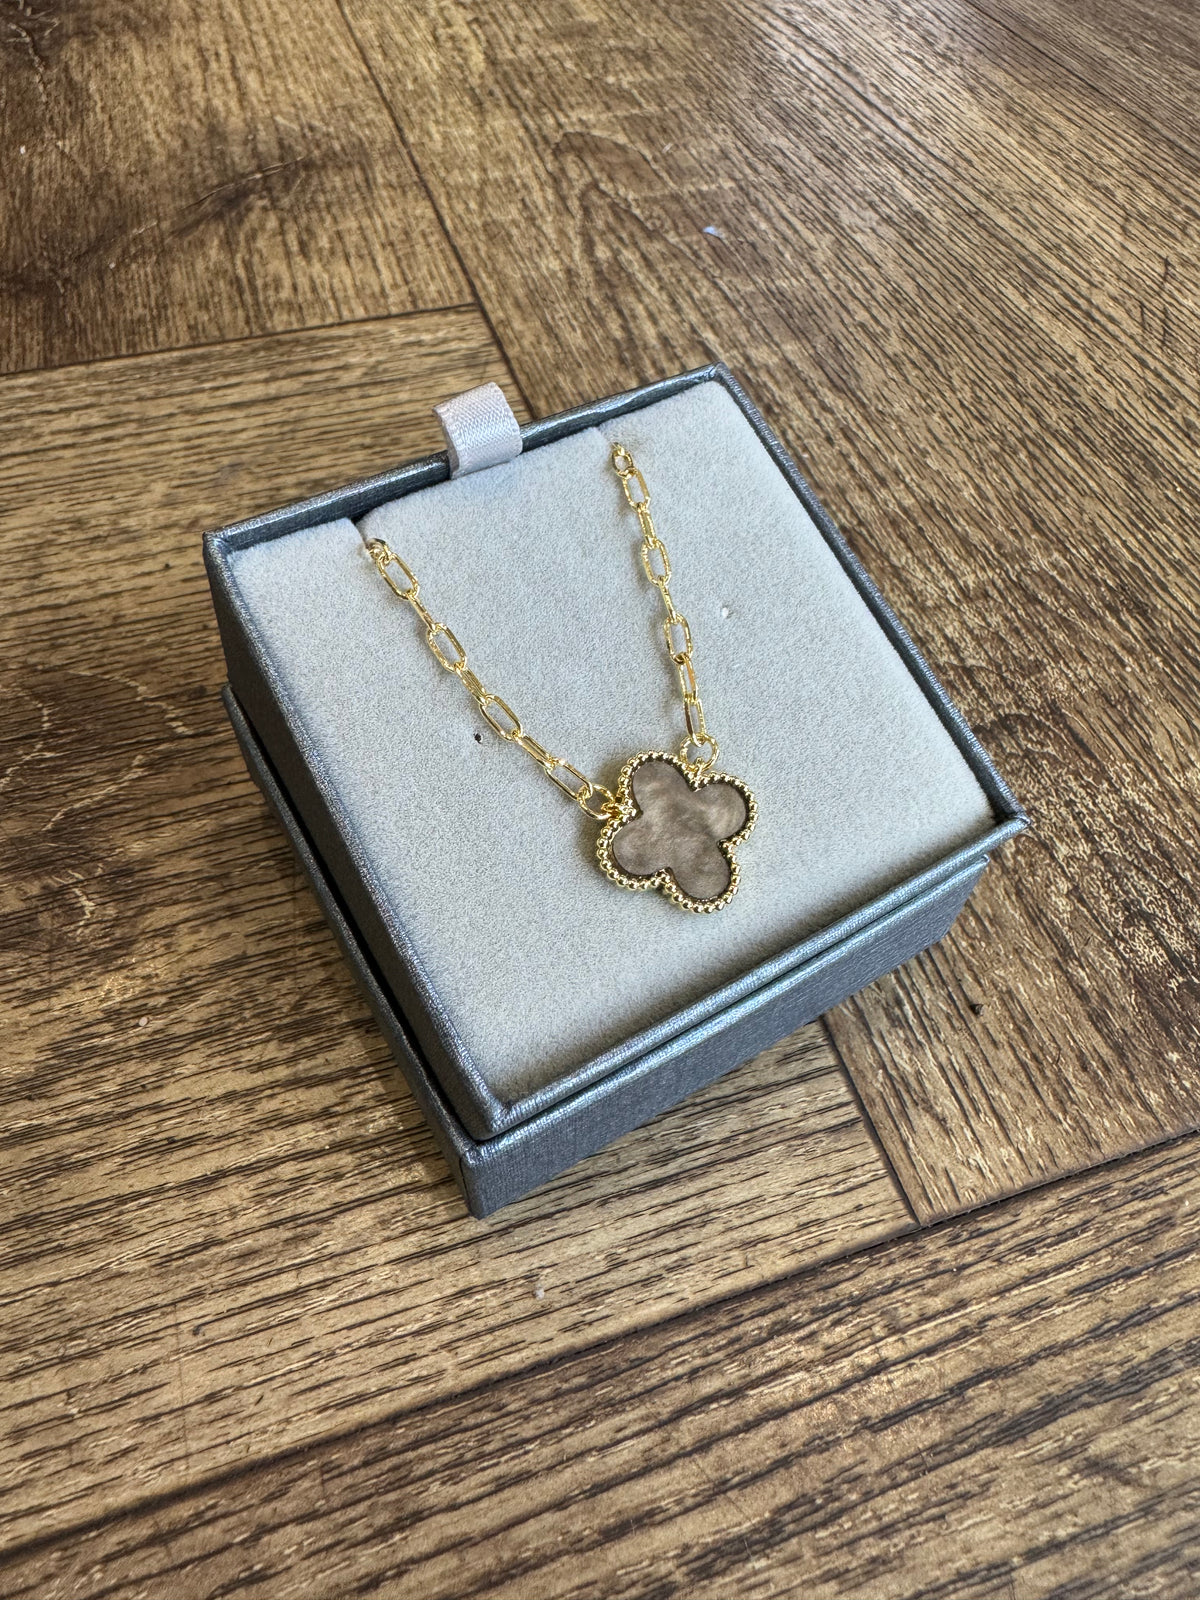 4-Leaf Clover Necklace | Gold & Charcoal Grey